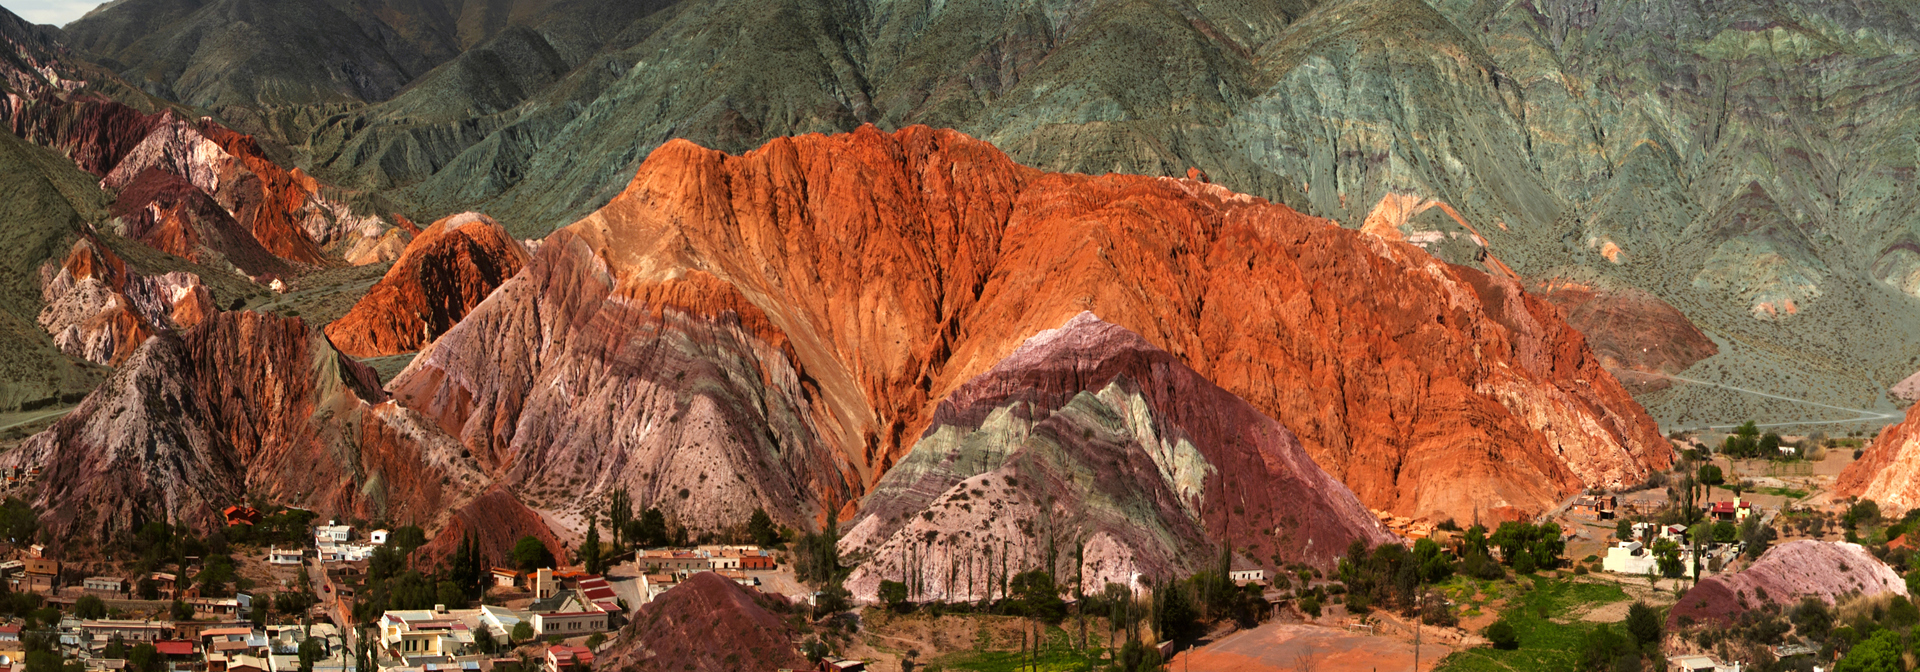 argentina - purmamarca_syv farvet bjerg03